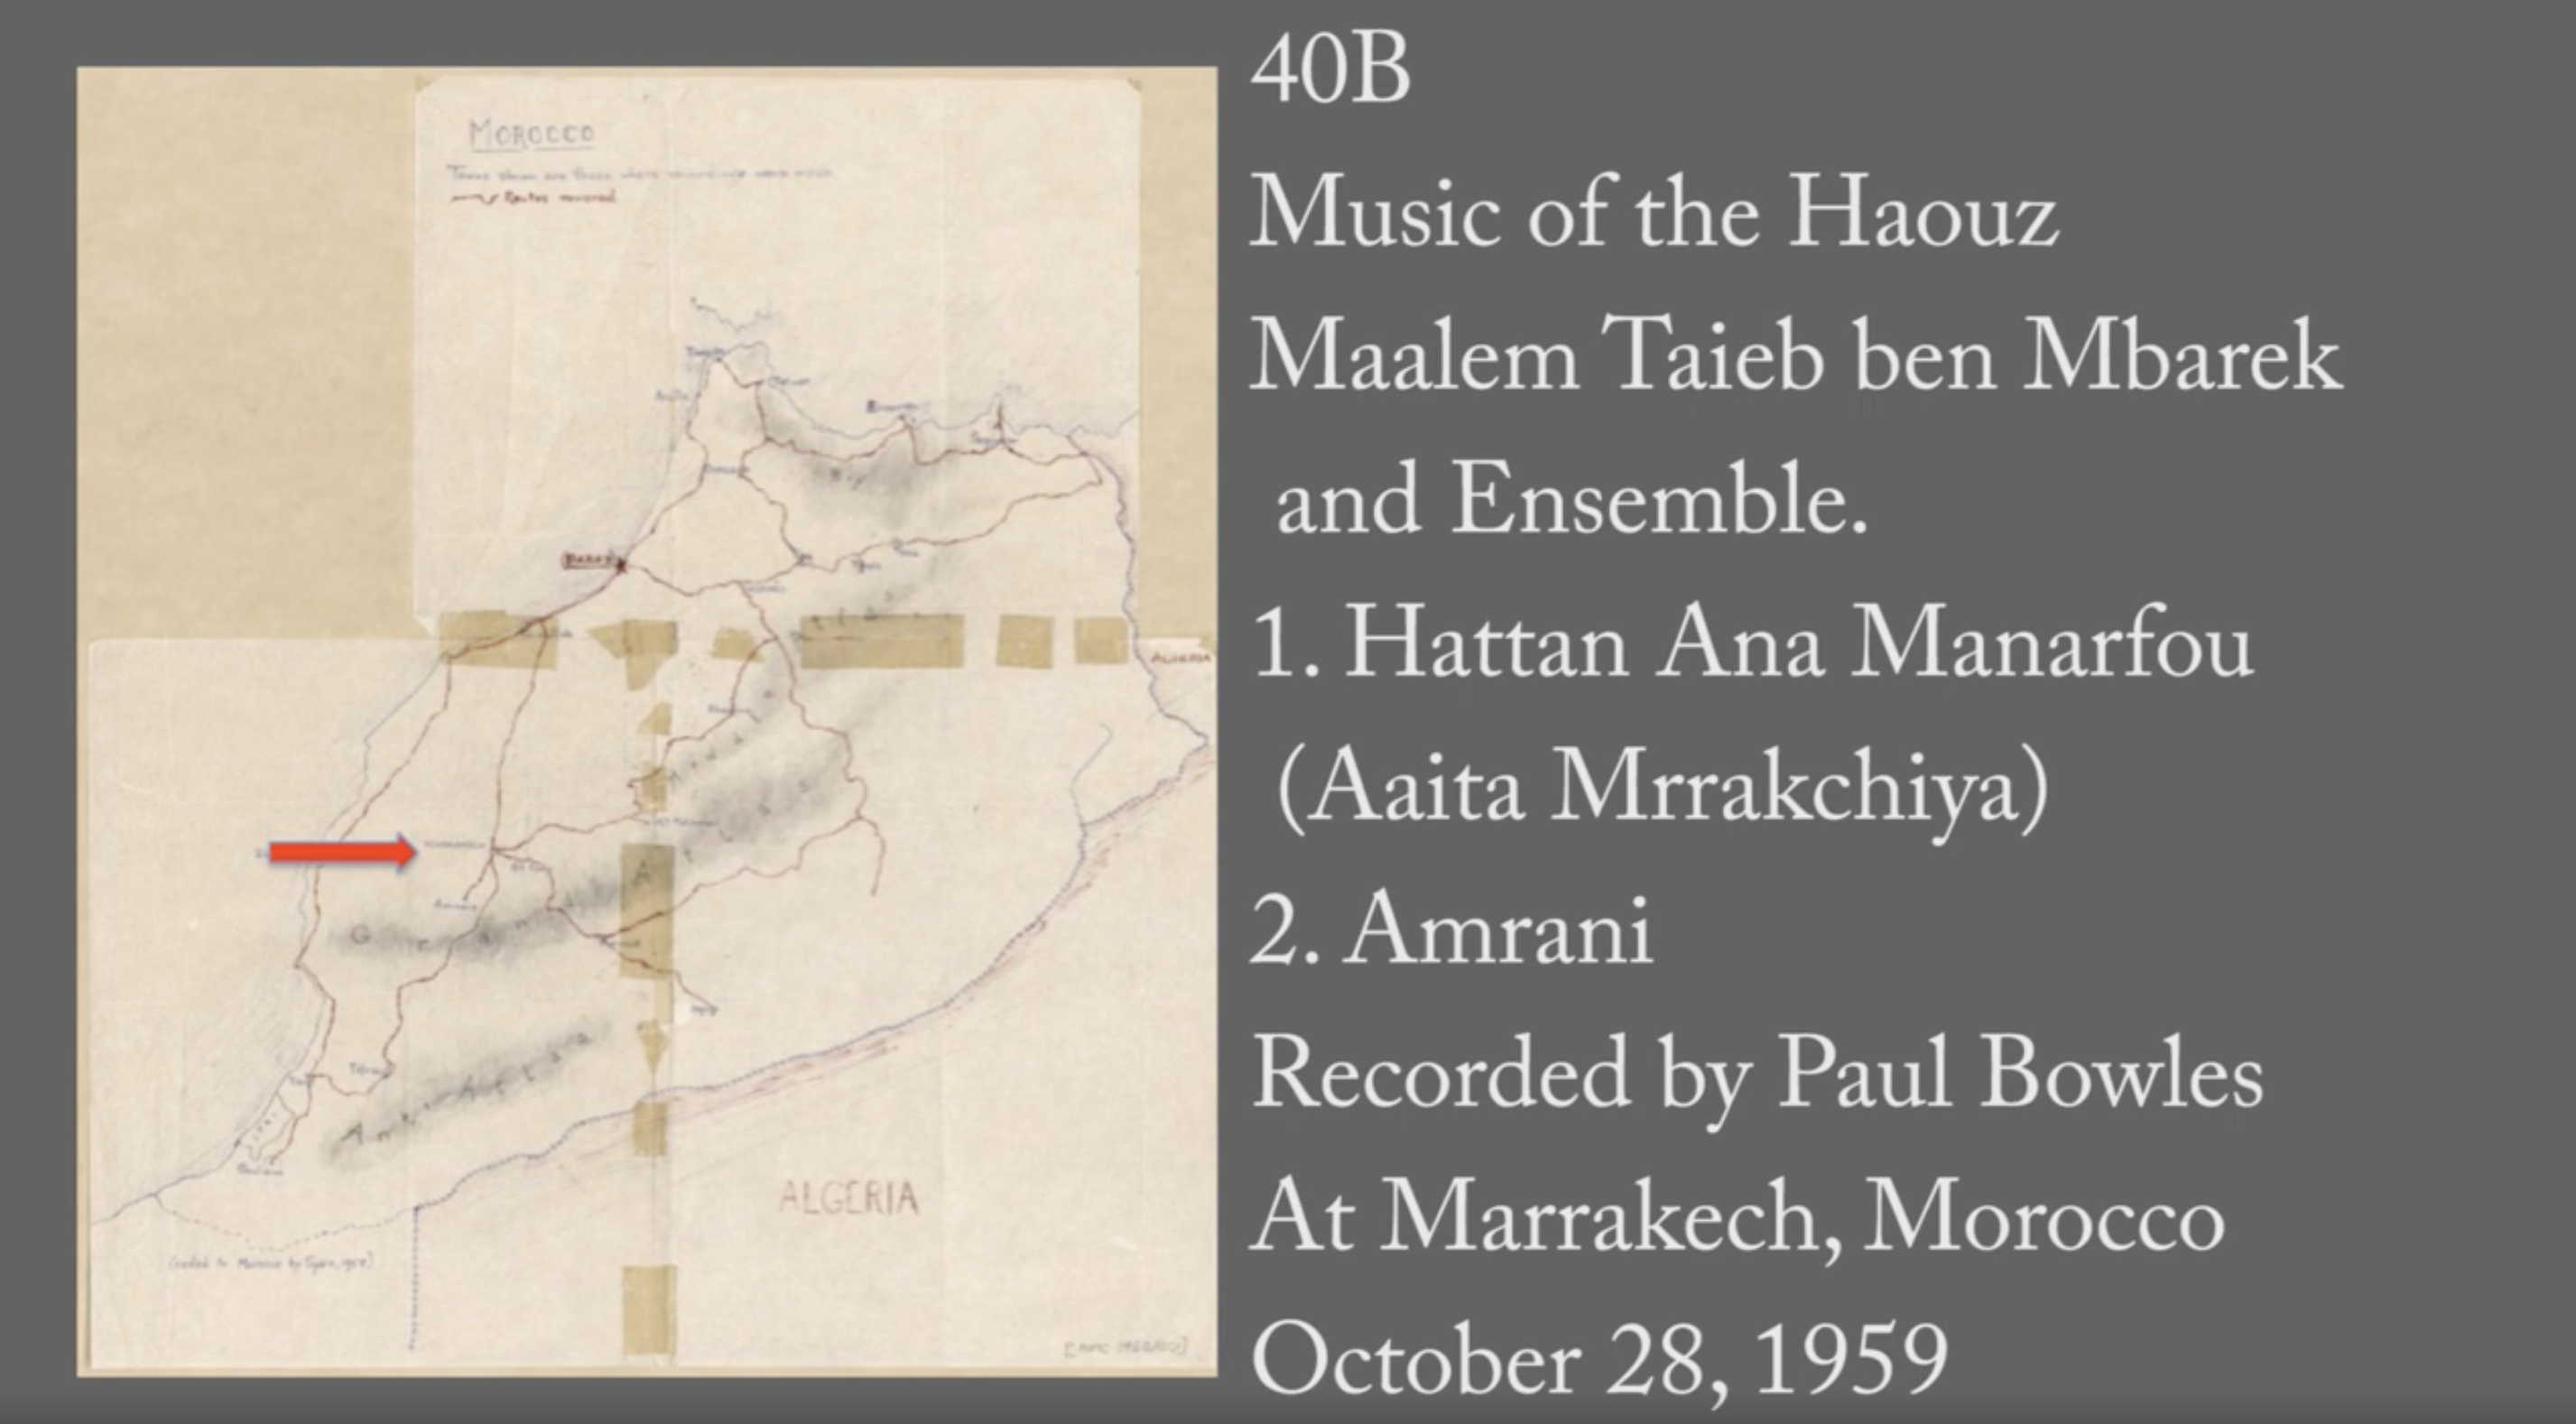 40B: Hattan Ana Manarfou and Amrani (Music of the Haouz)